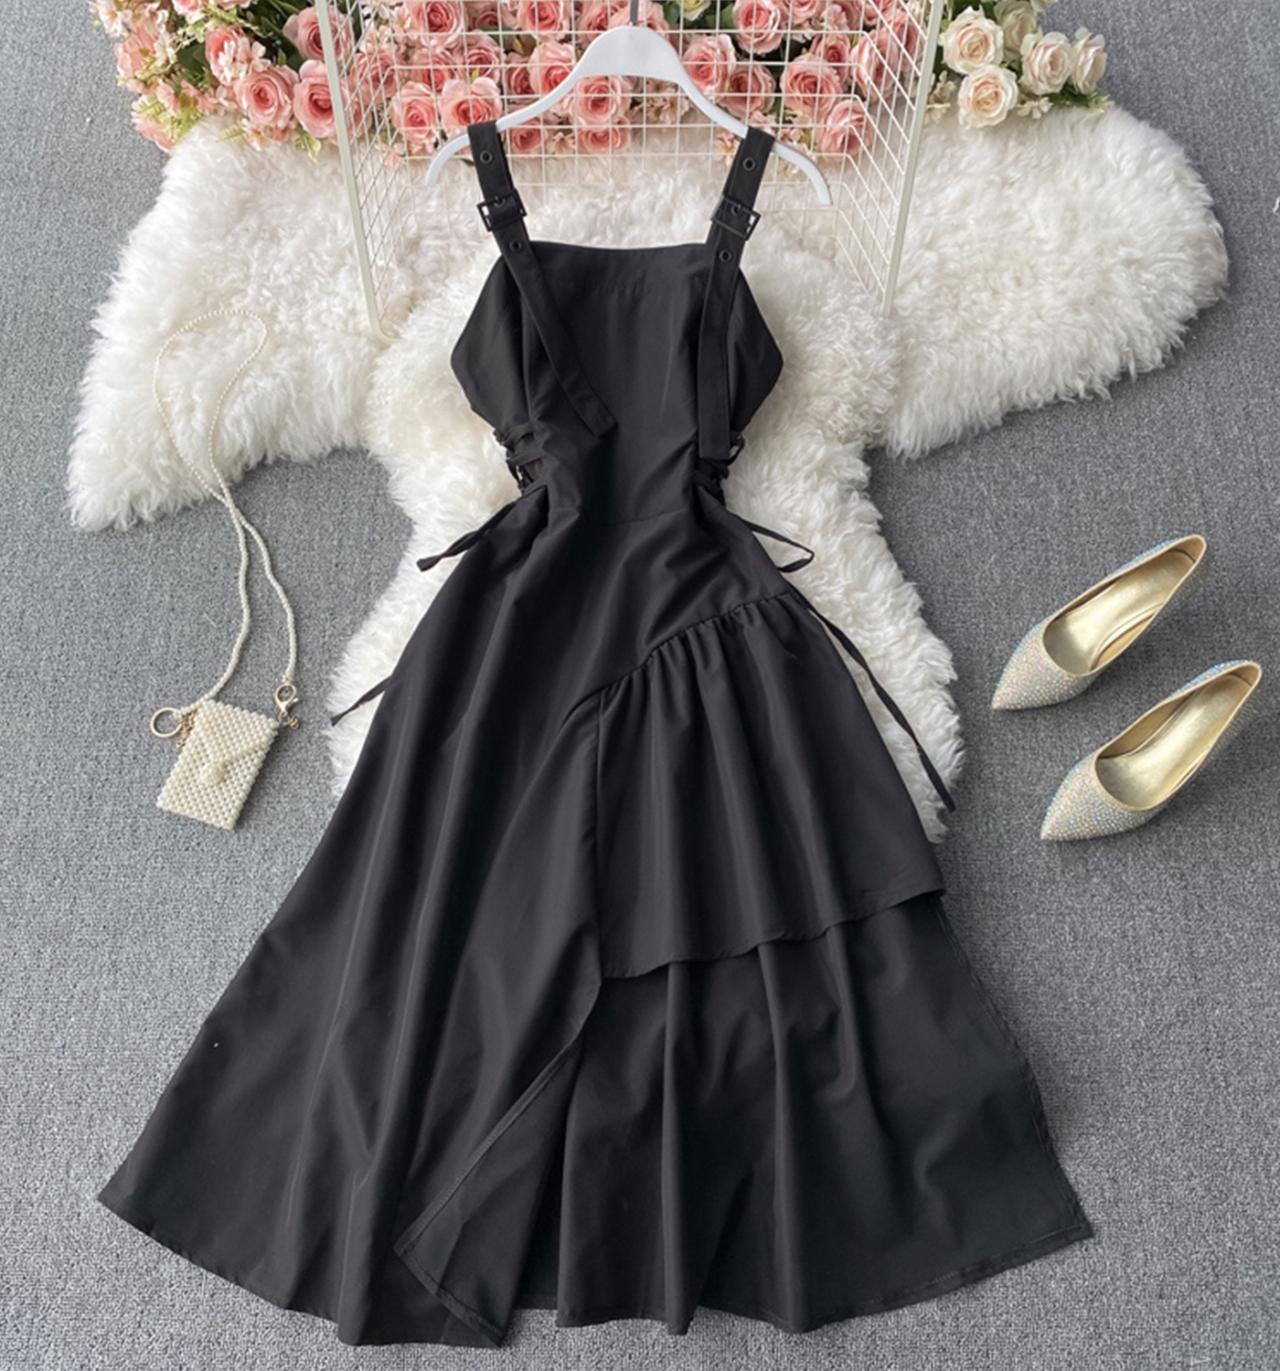 Black A Line Dress Fashion Dress